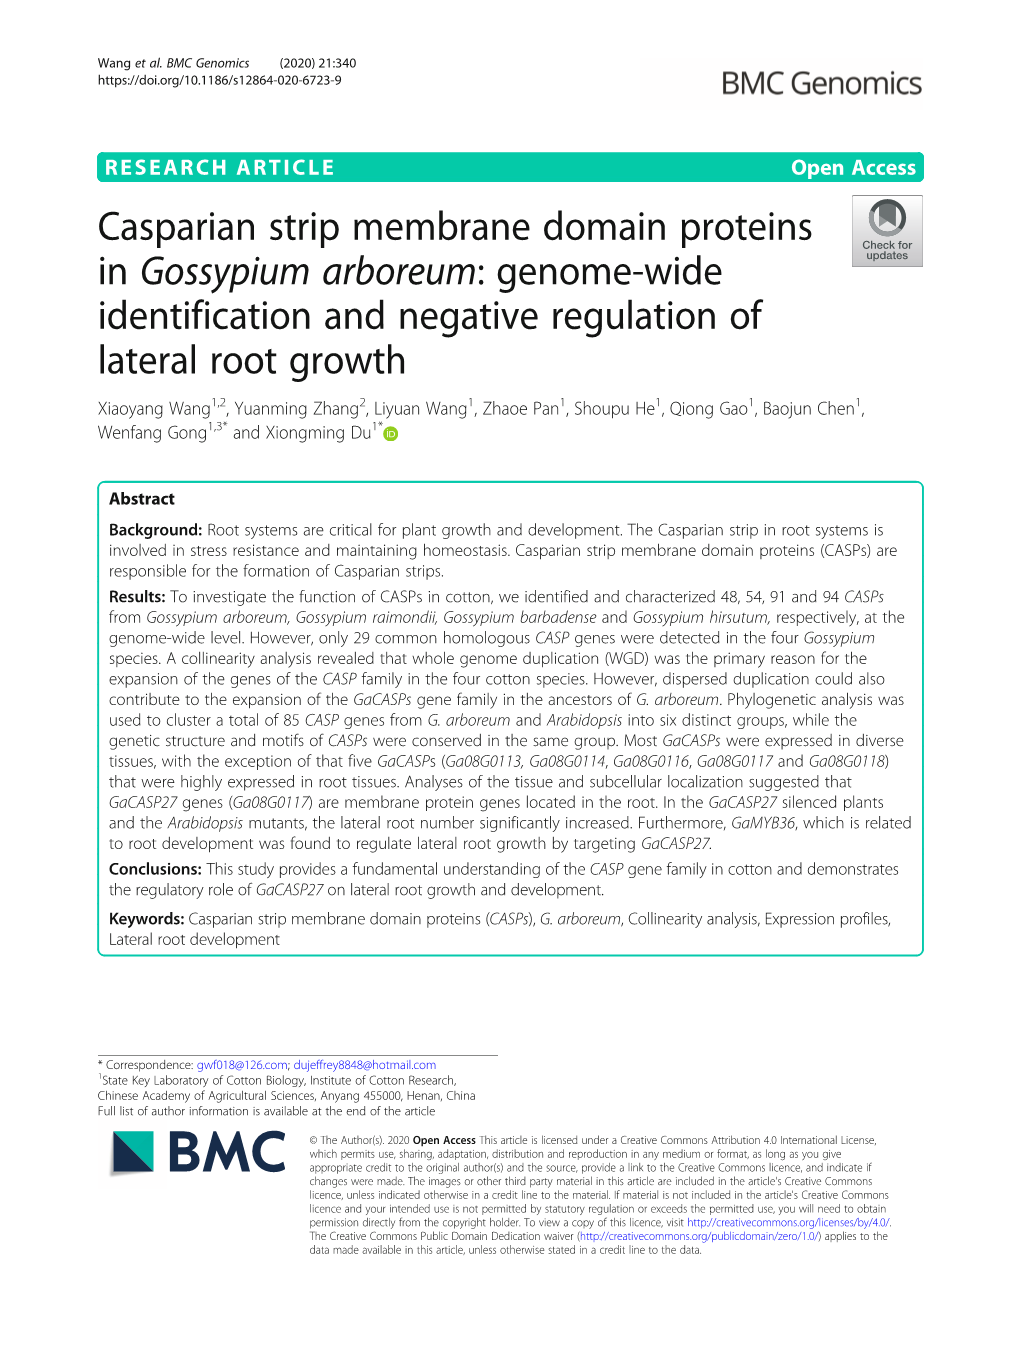 Casparian Strip Membrane Domain Proteins in Gossypium Arboreum: Genome-Wide Identification and Negative Regulation of Lateral Ro